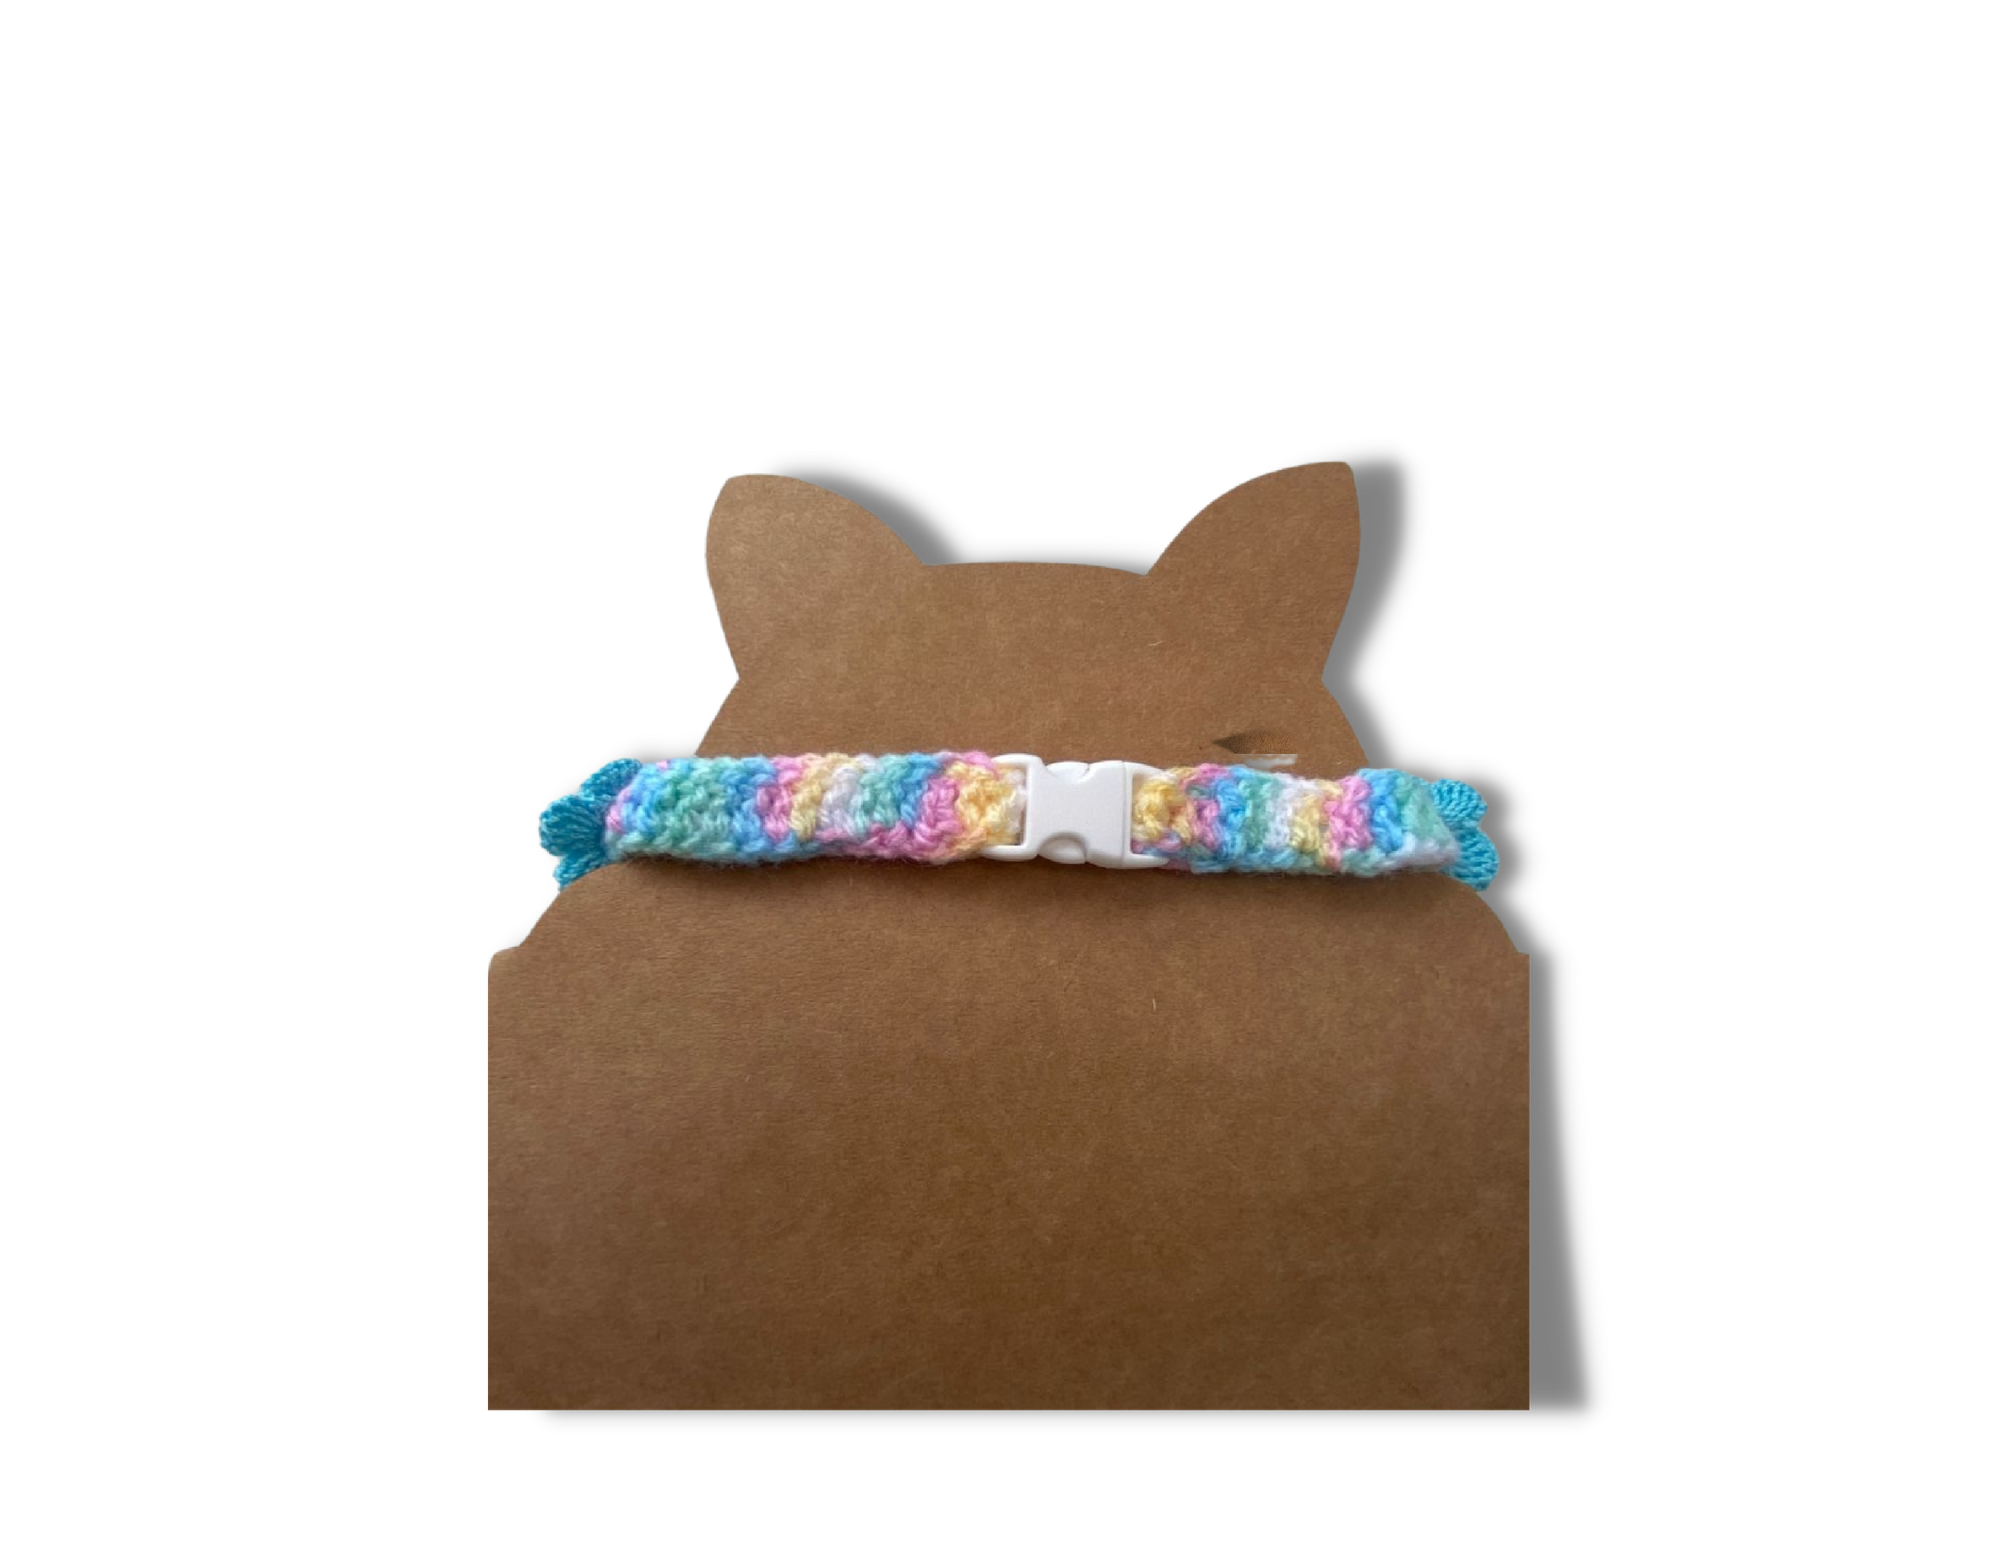 Handmade Pet Collars - Scallop Series